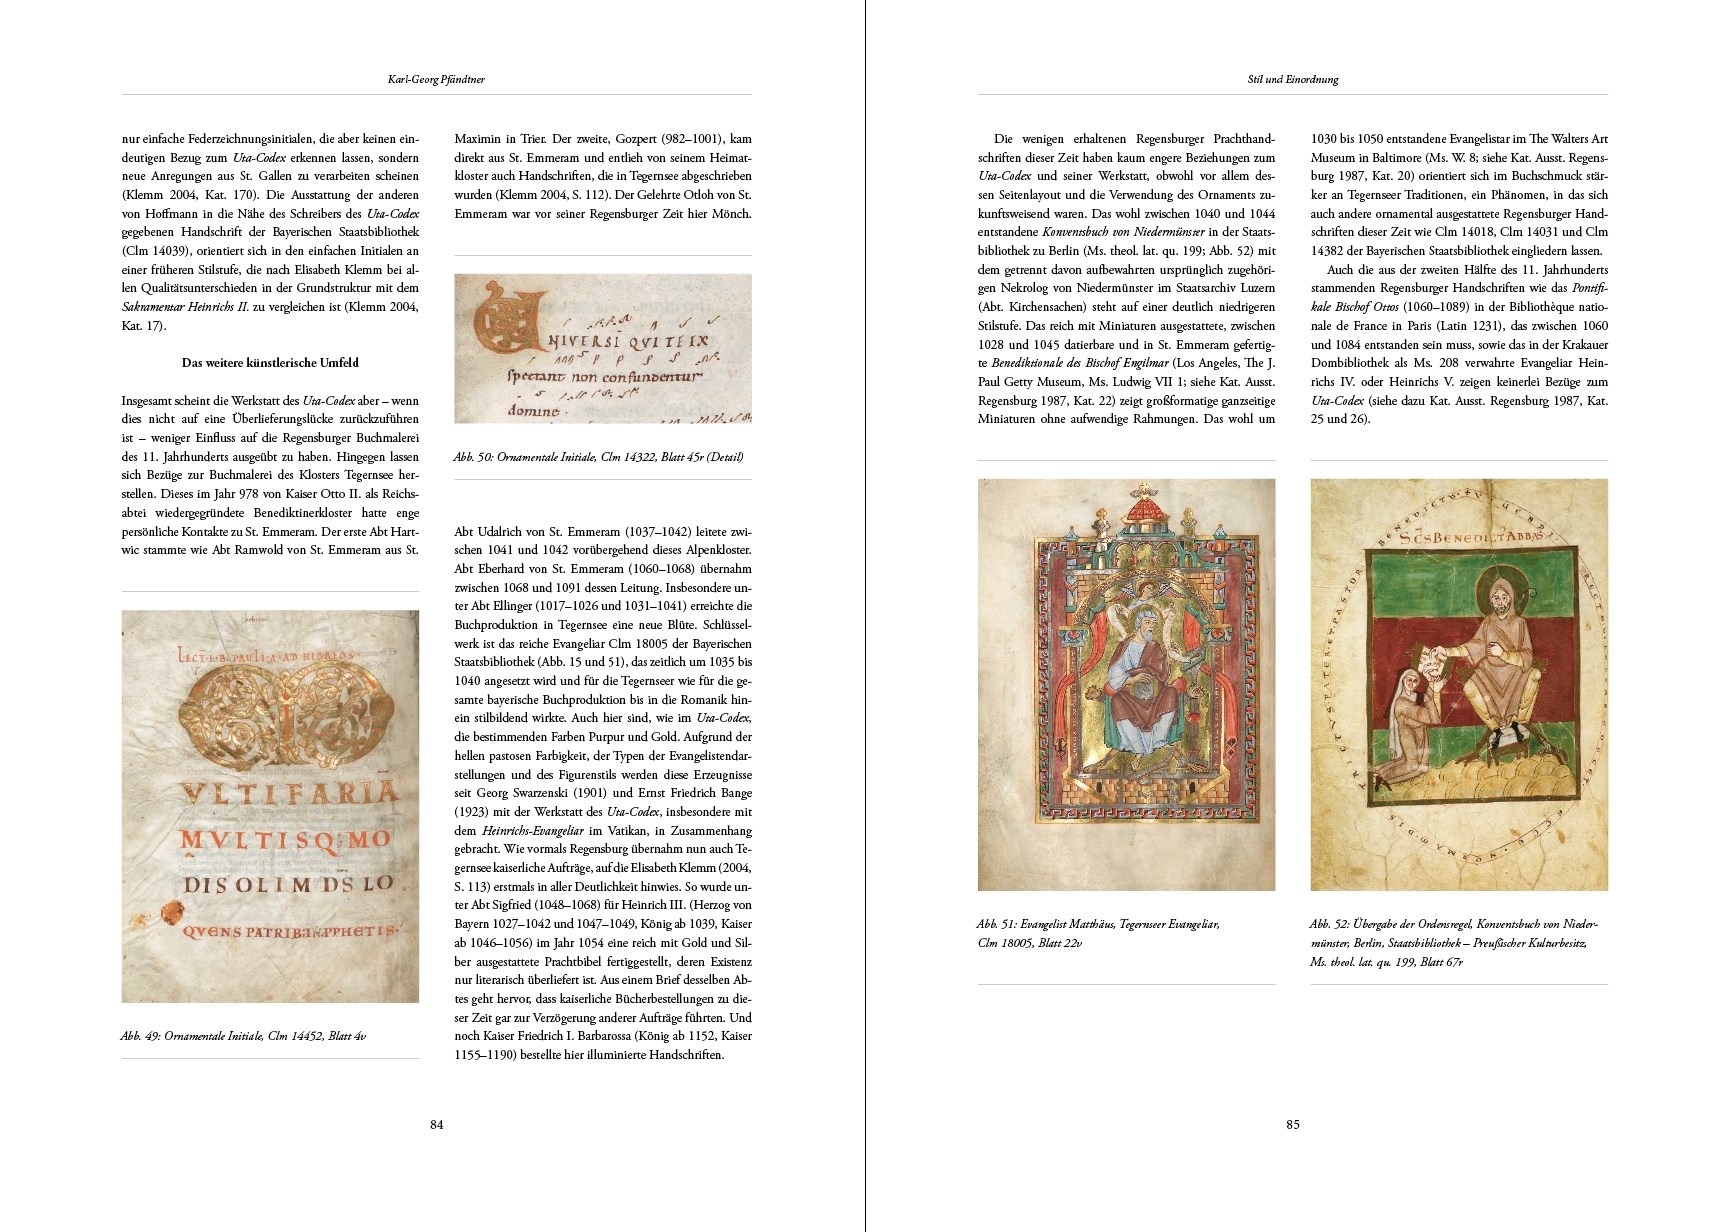 Kunstbuch-Edition des Uta-Codex, p. 84-85